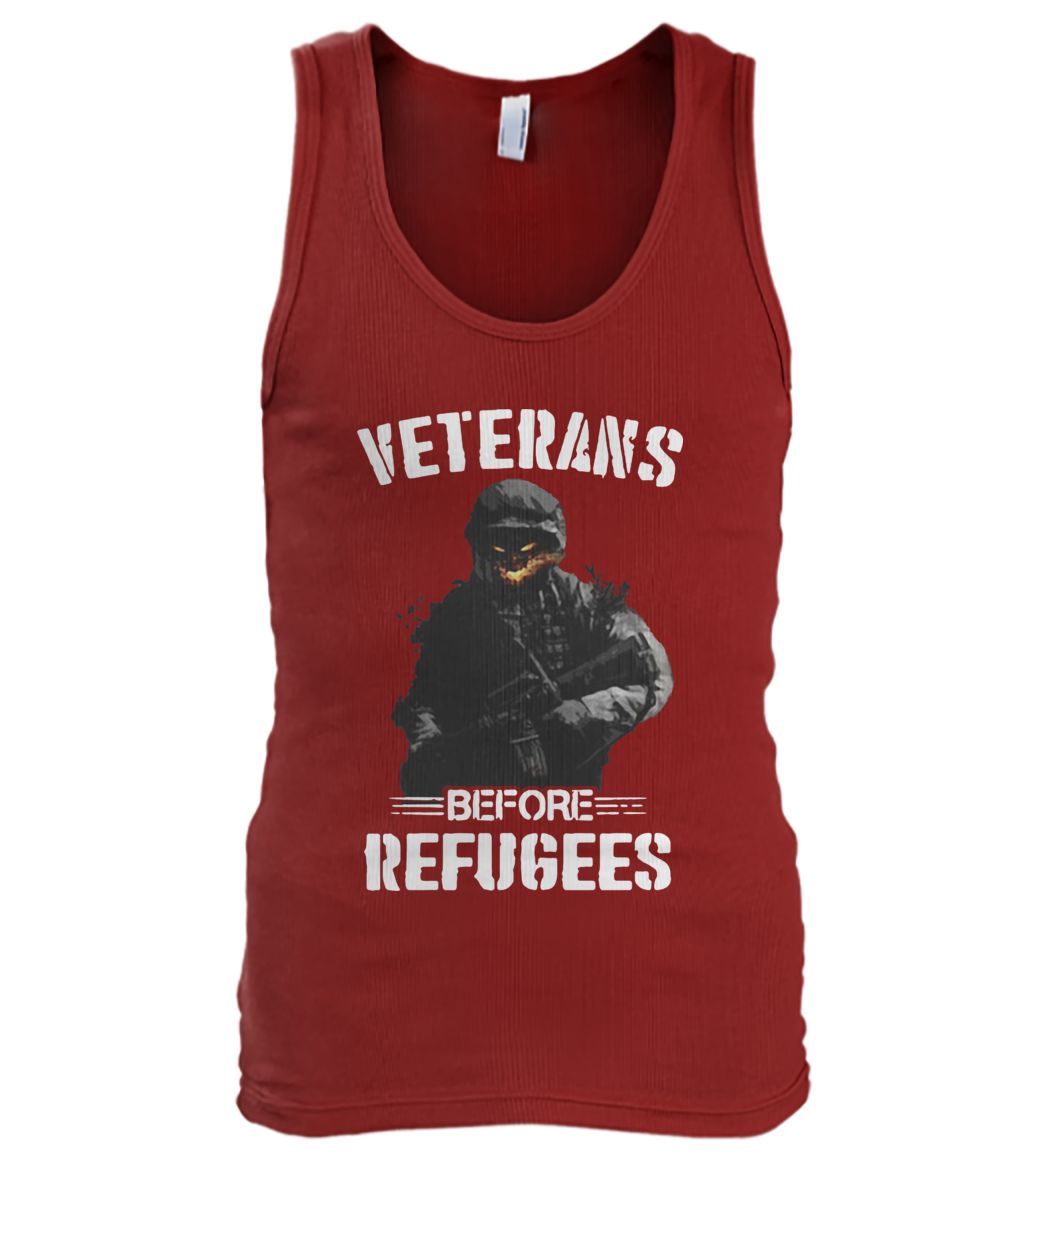 Veterans before refugees men's tank top